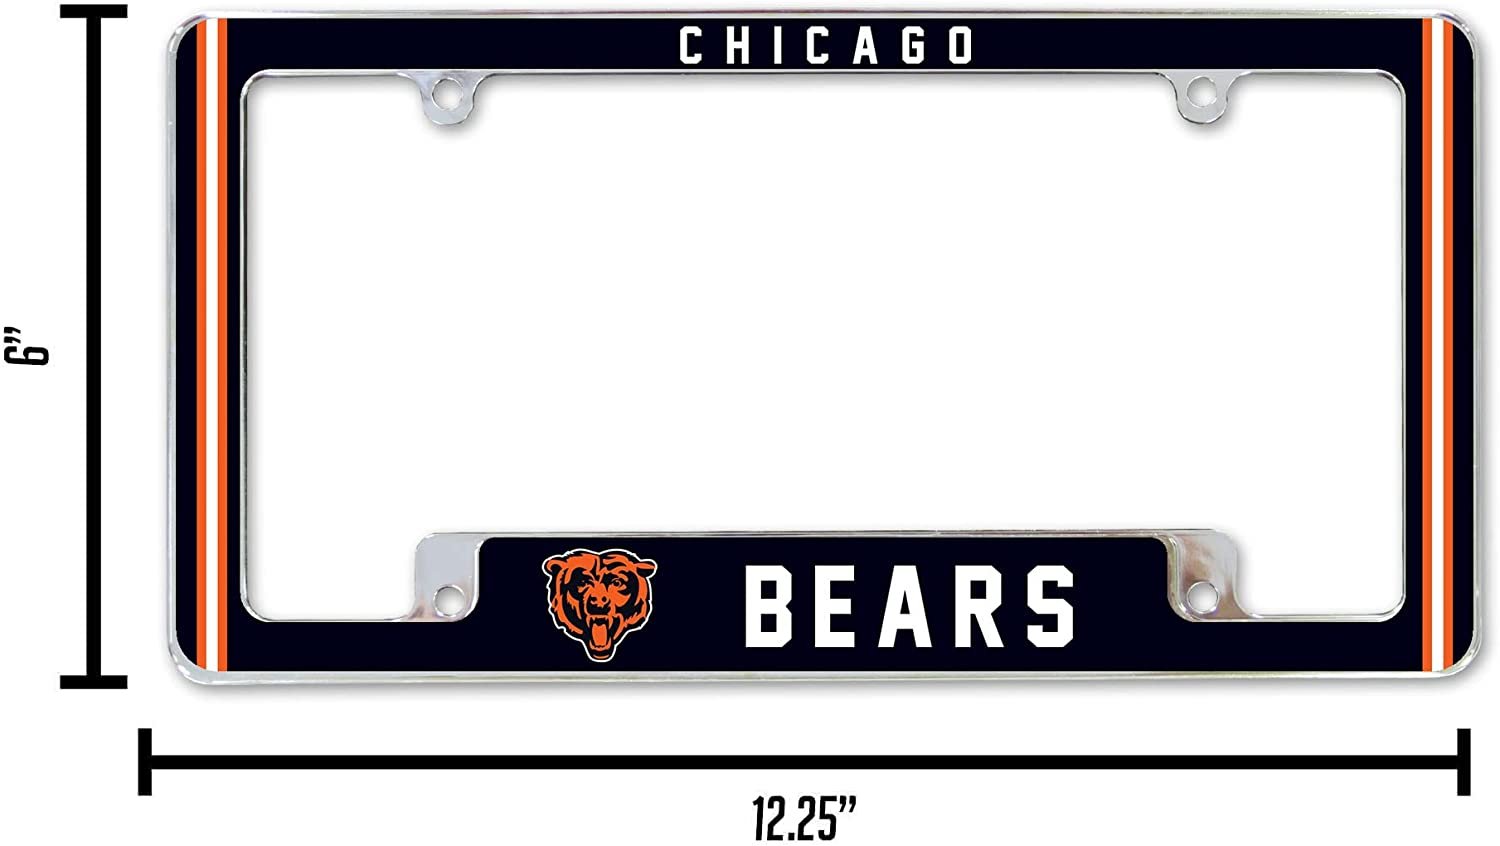 Chicago Bears Metal License Plate Frame Chrome Tag Cover Alternate Design 6x12 Inch